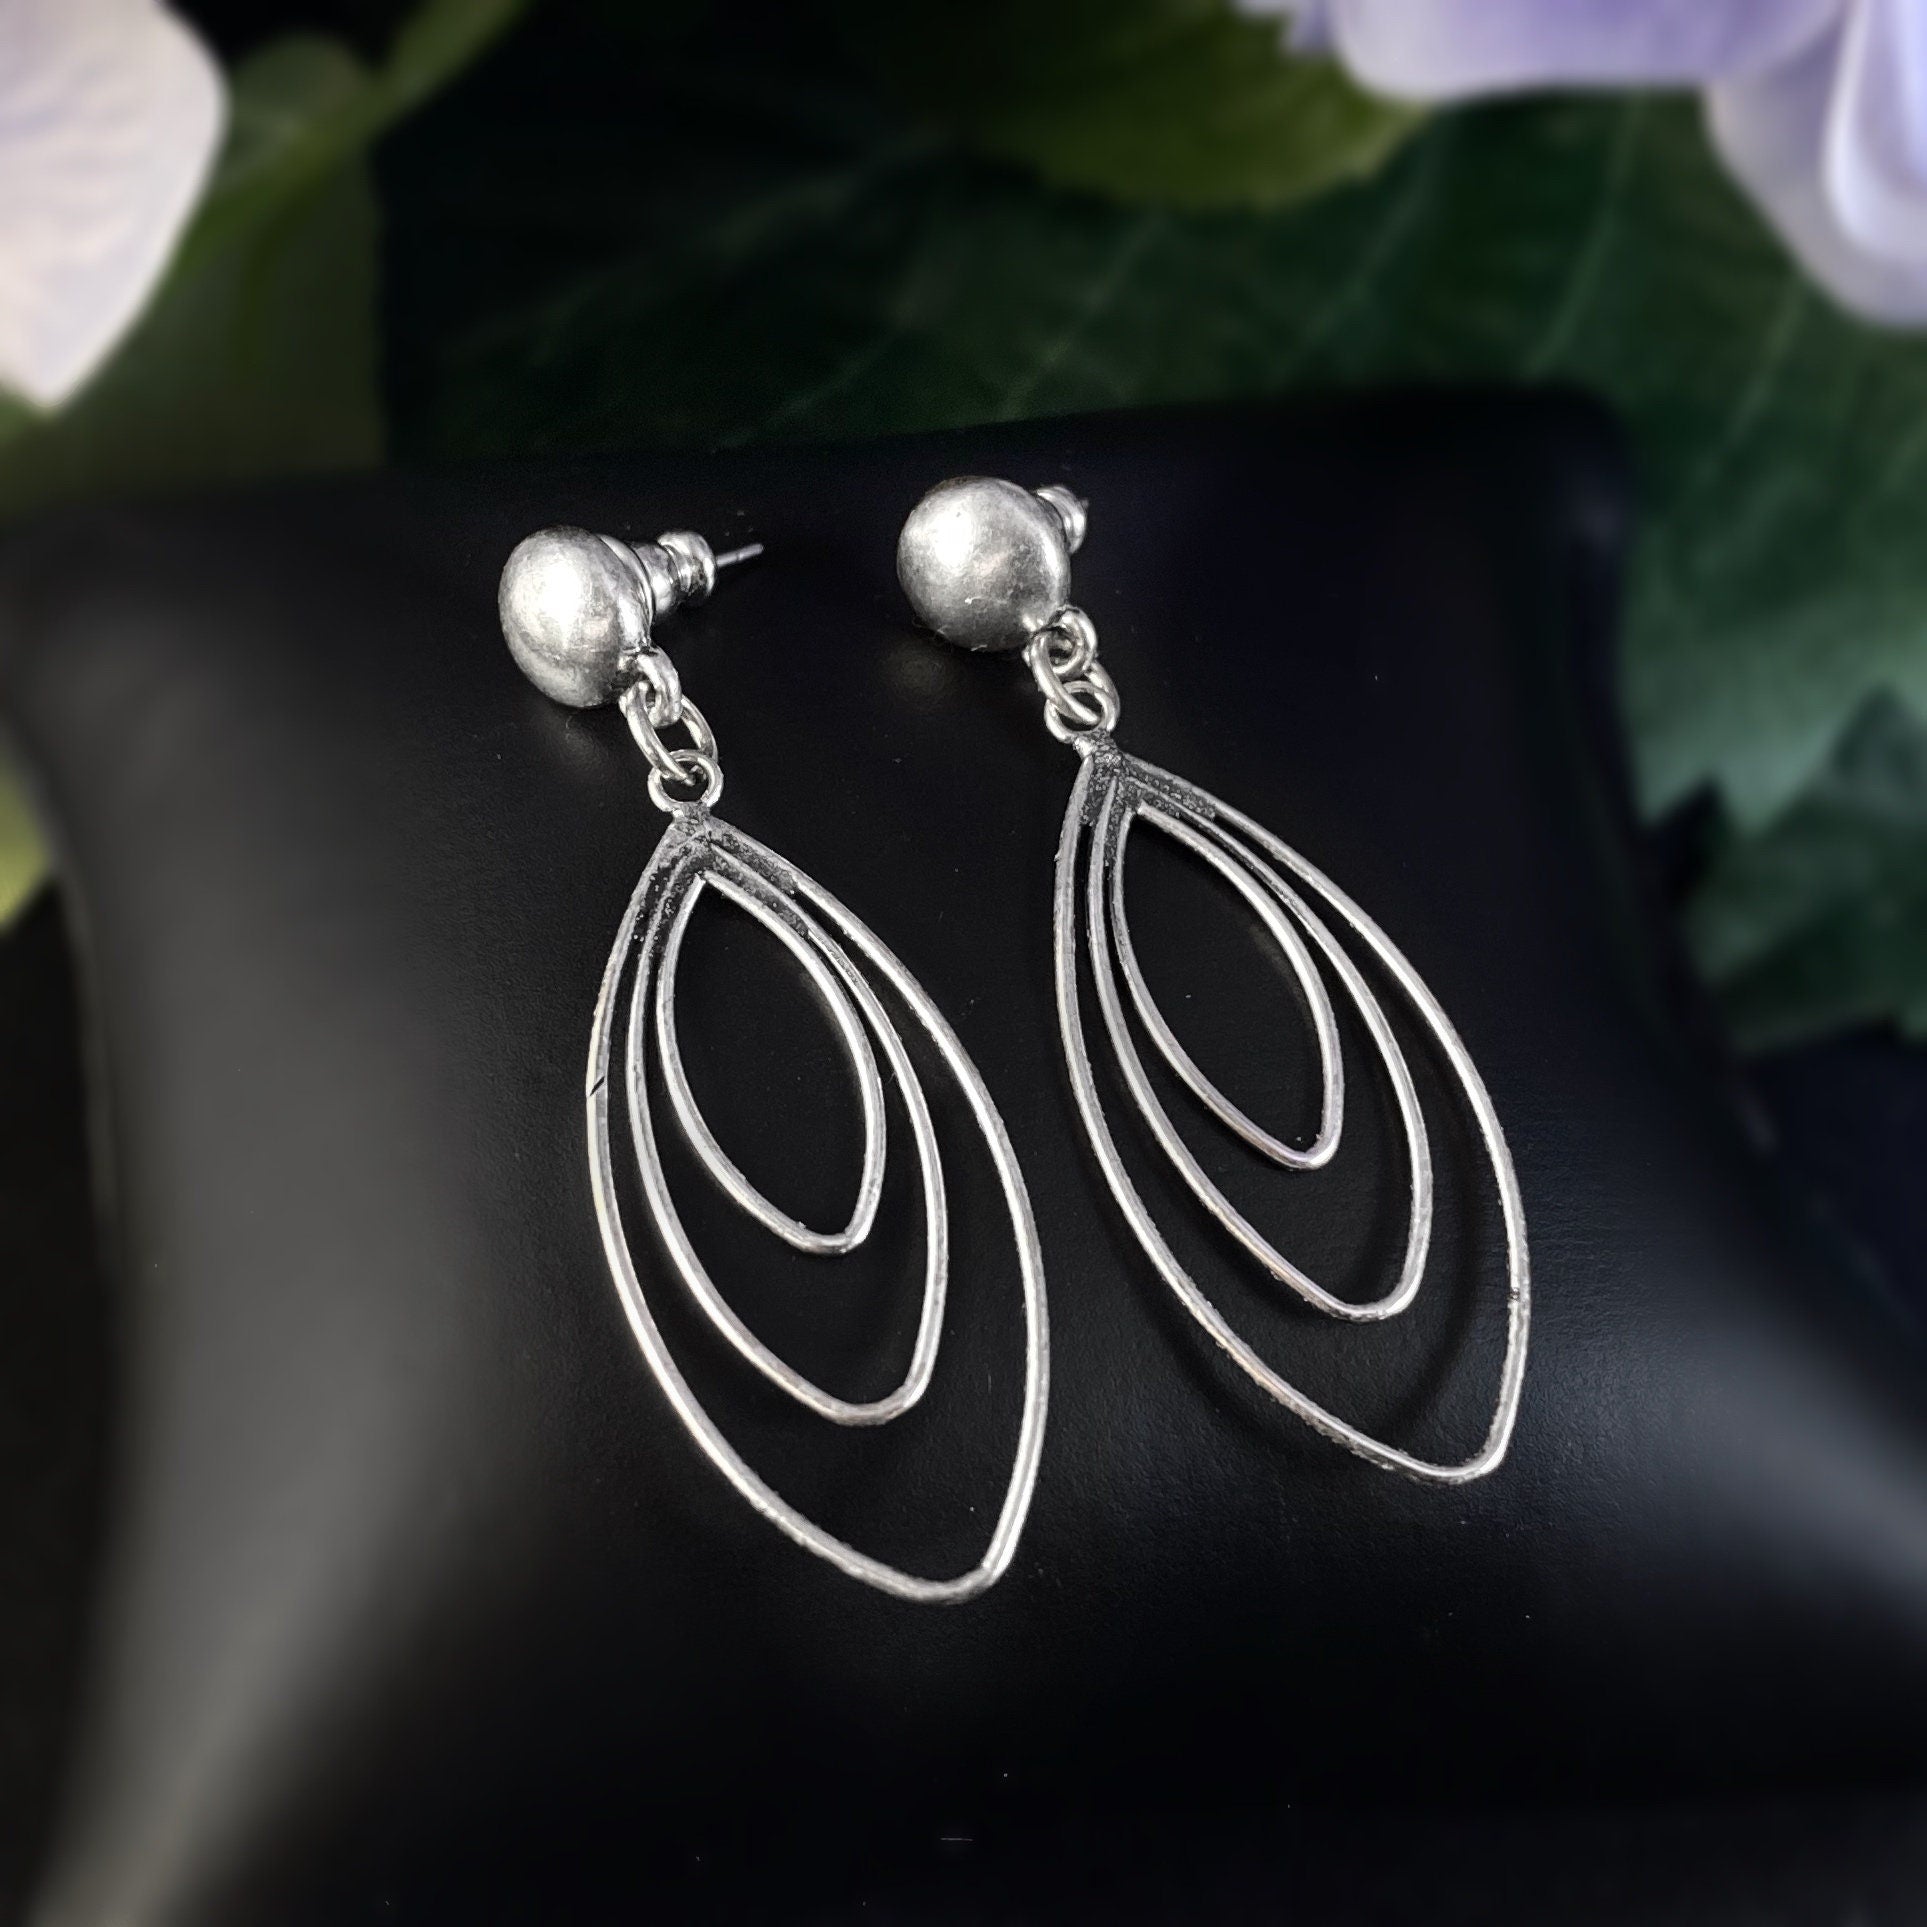 Delicate Silver Post Earrings - Handmade Nickel Free Ulla Jewelry